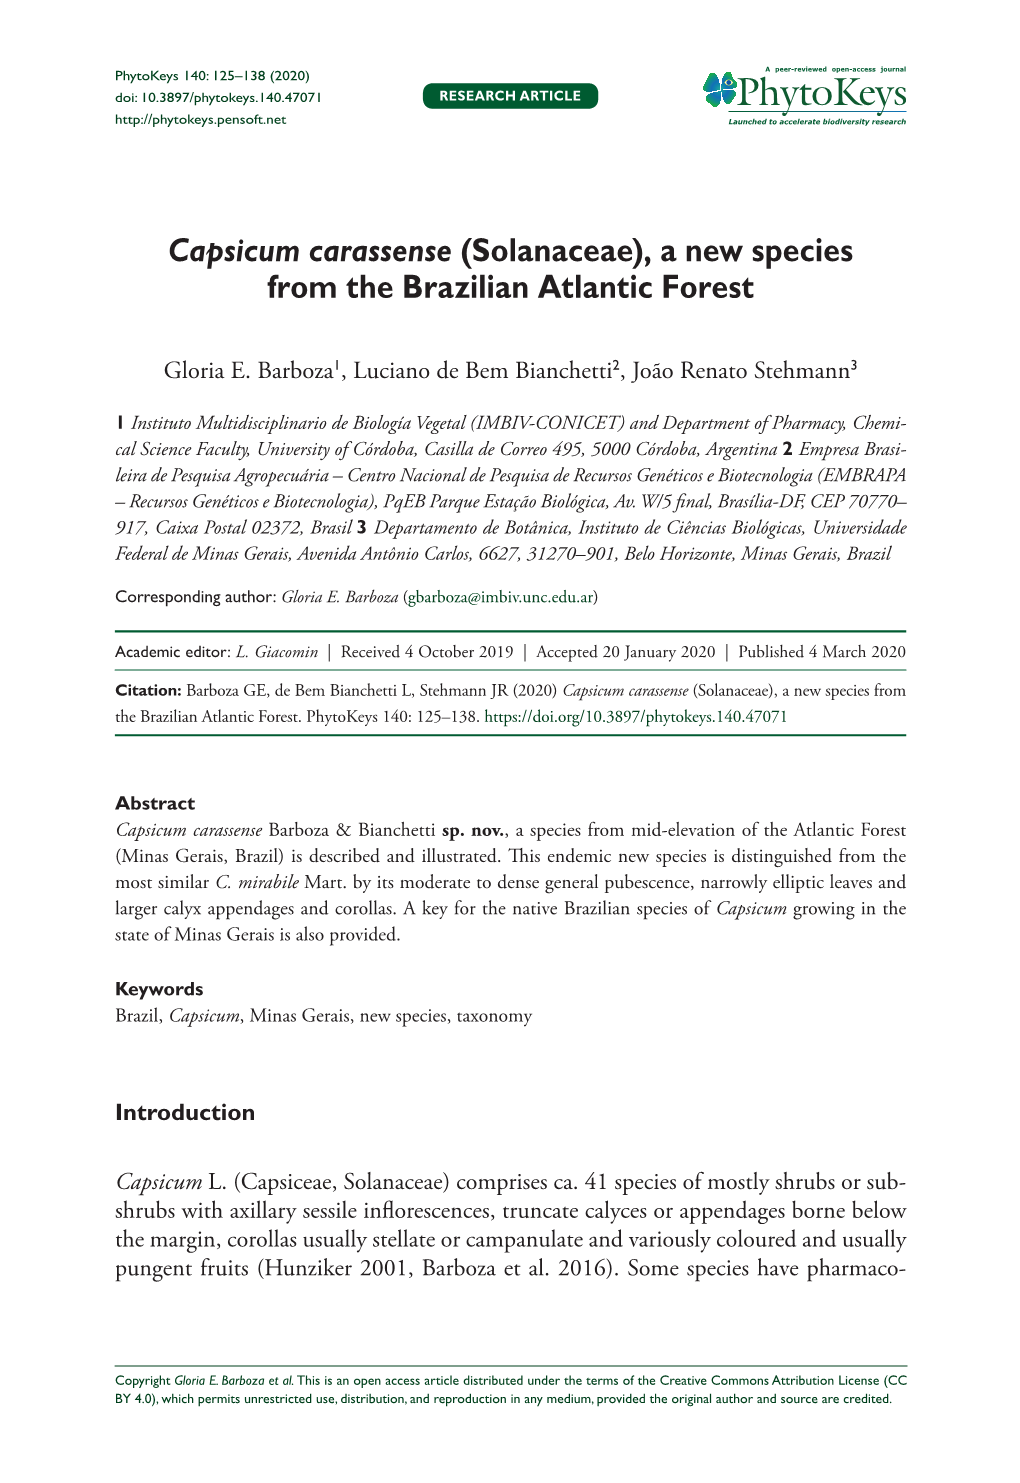 Capsicum Carassense (Solanaceae), a New Species from the Brazilian Atlantic Forest